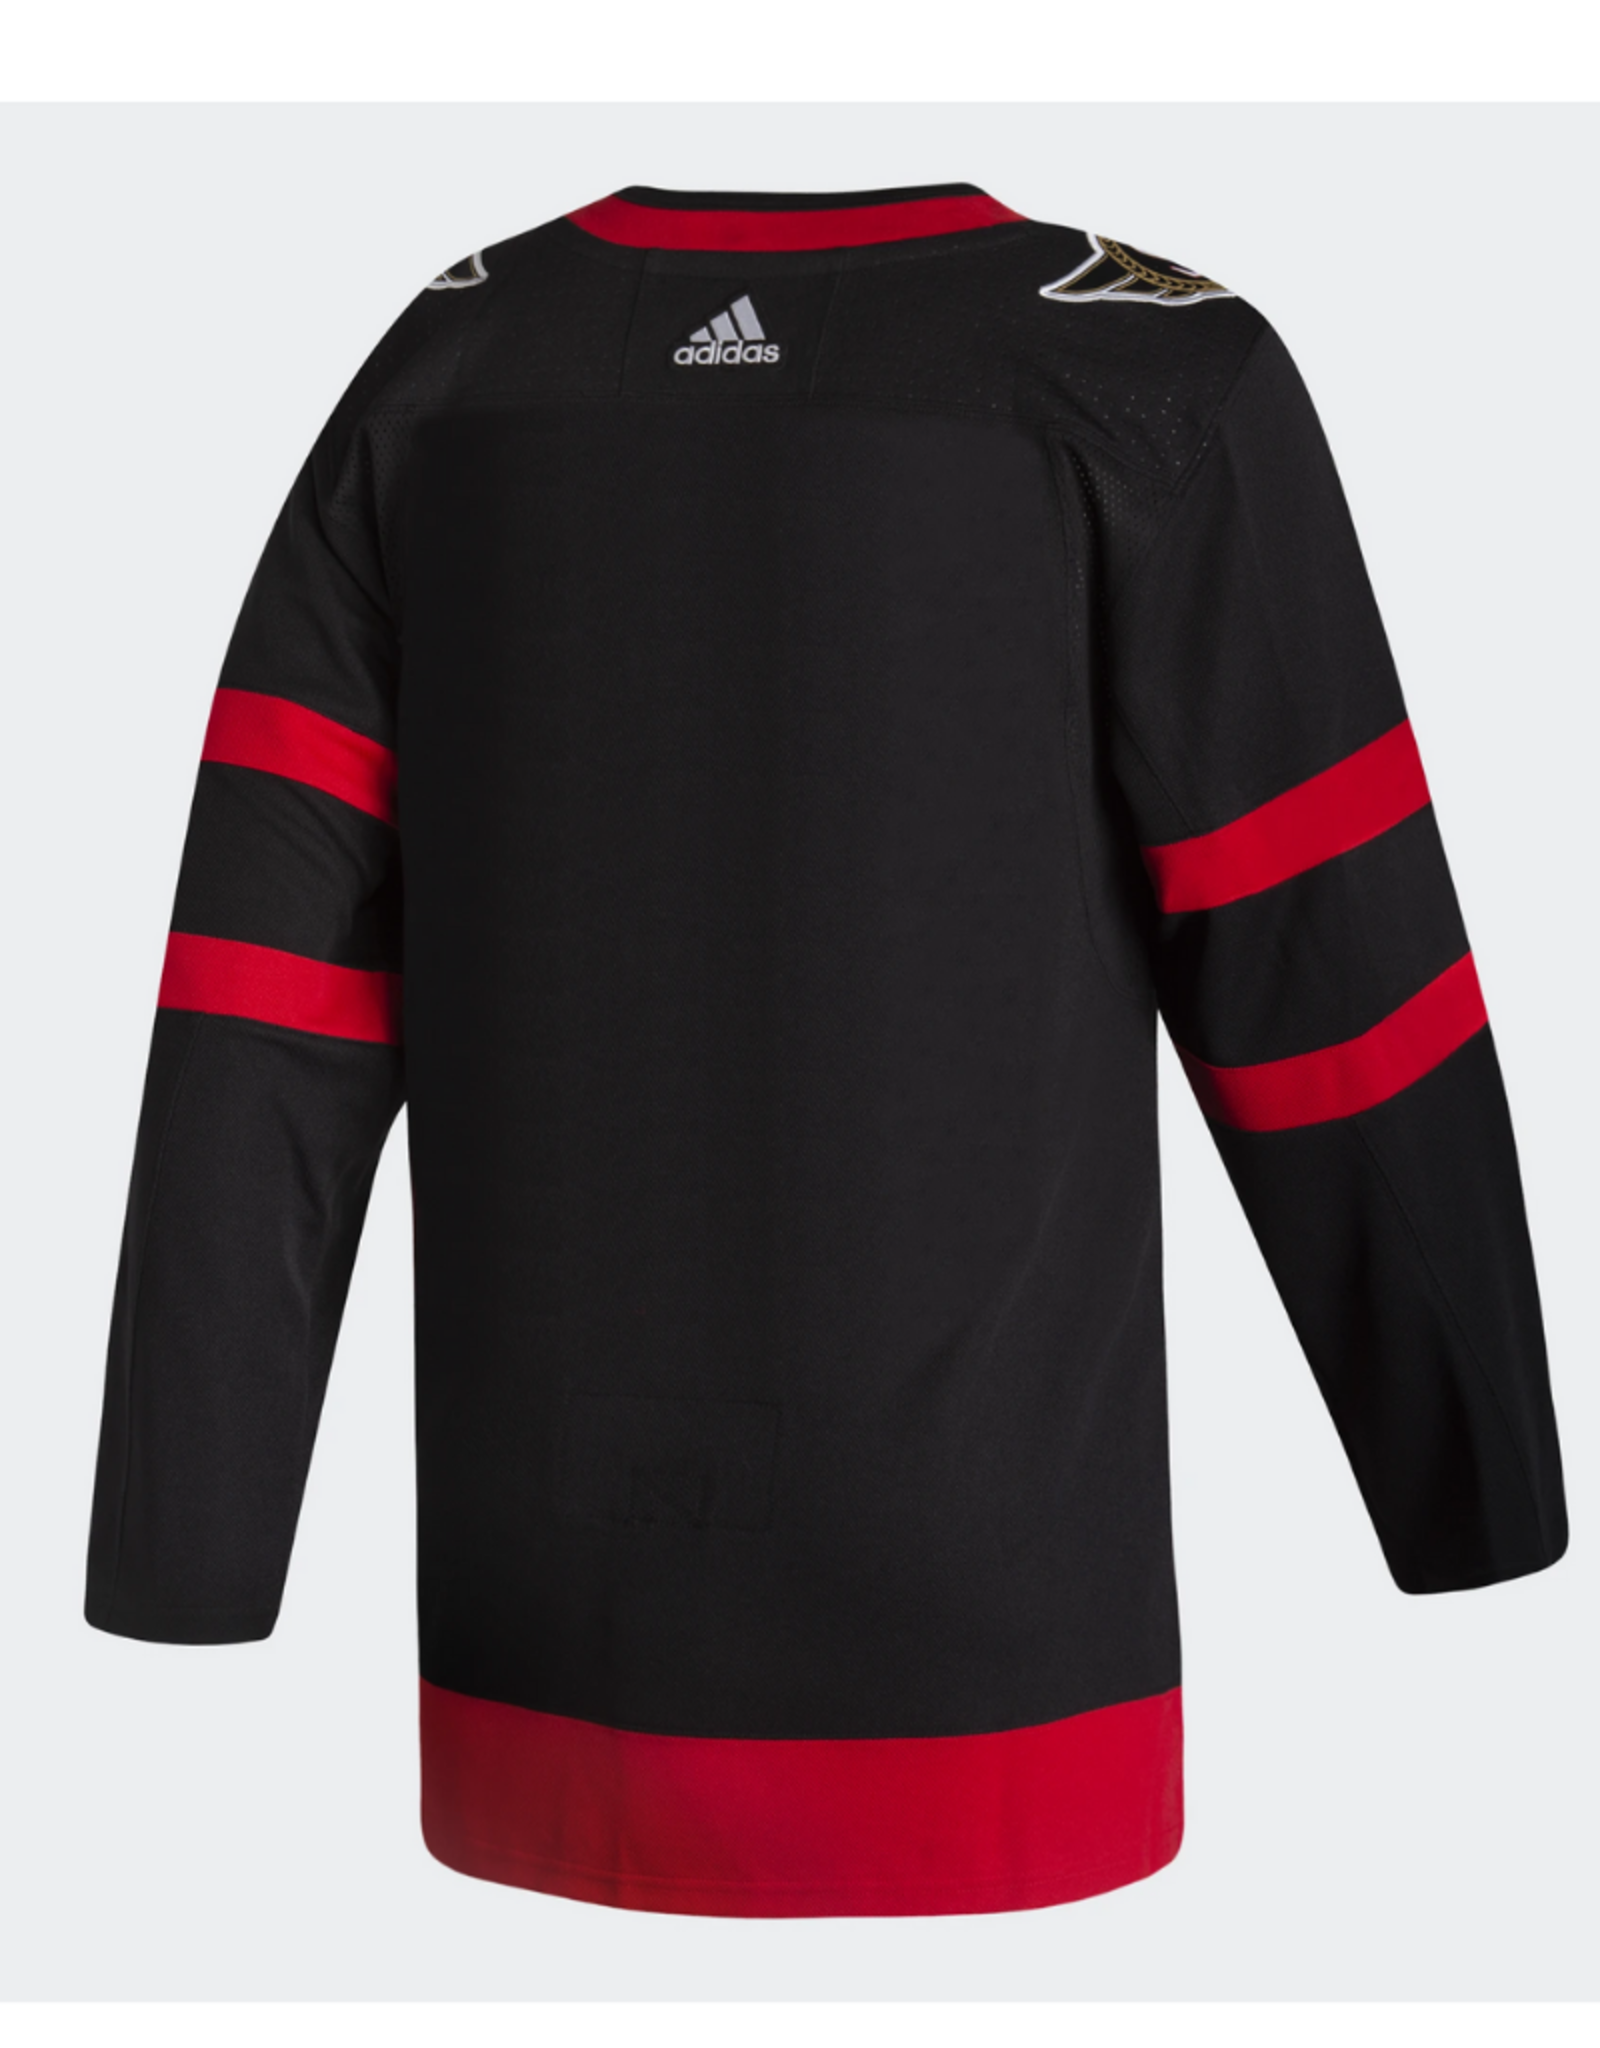 Adidas Adidas Men's '21 Authentic Jersey Ottawa Senators Black